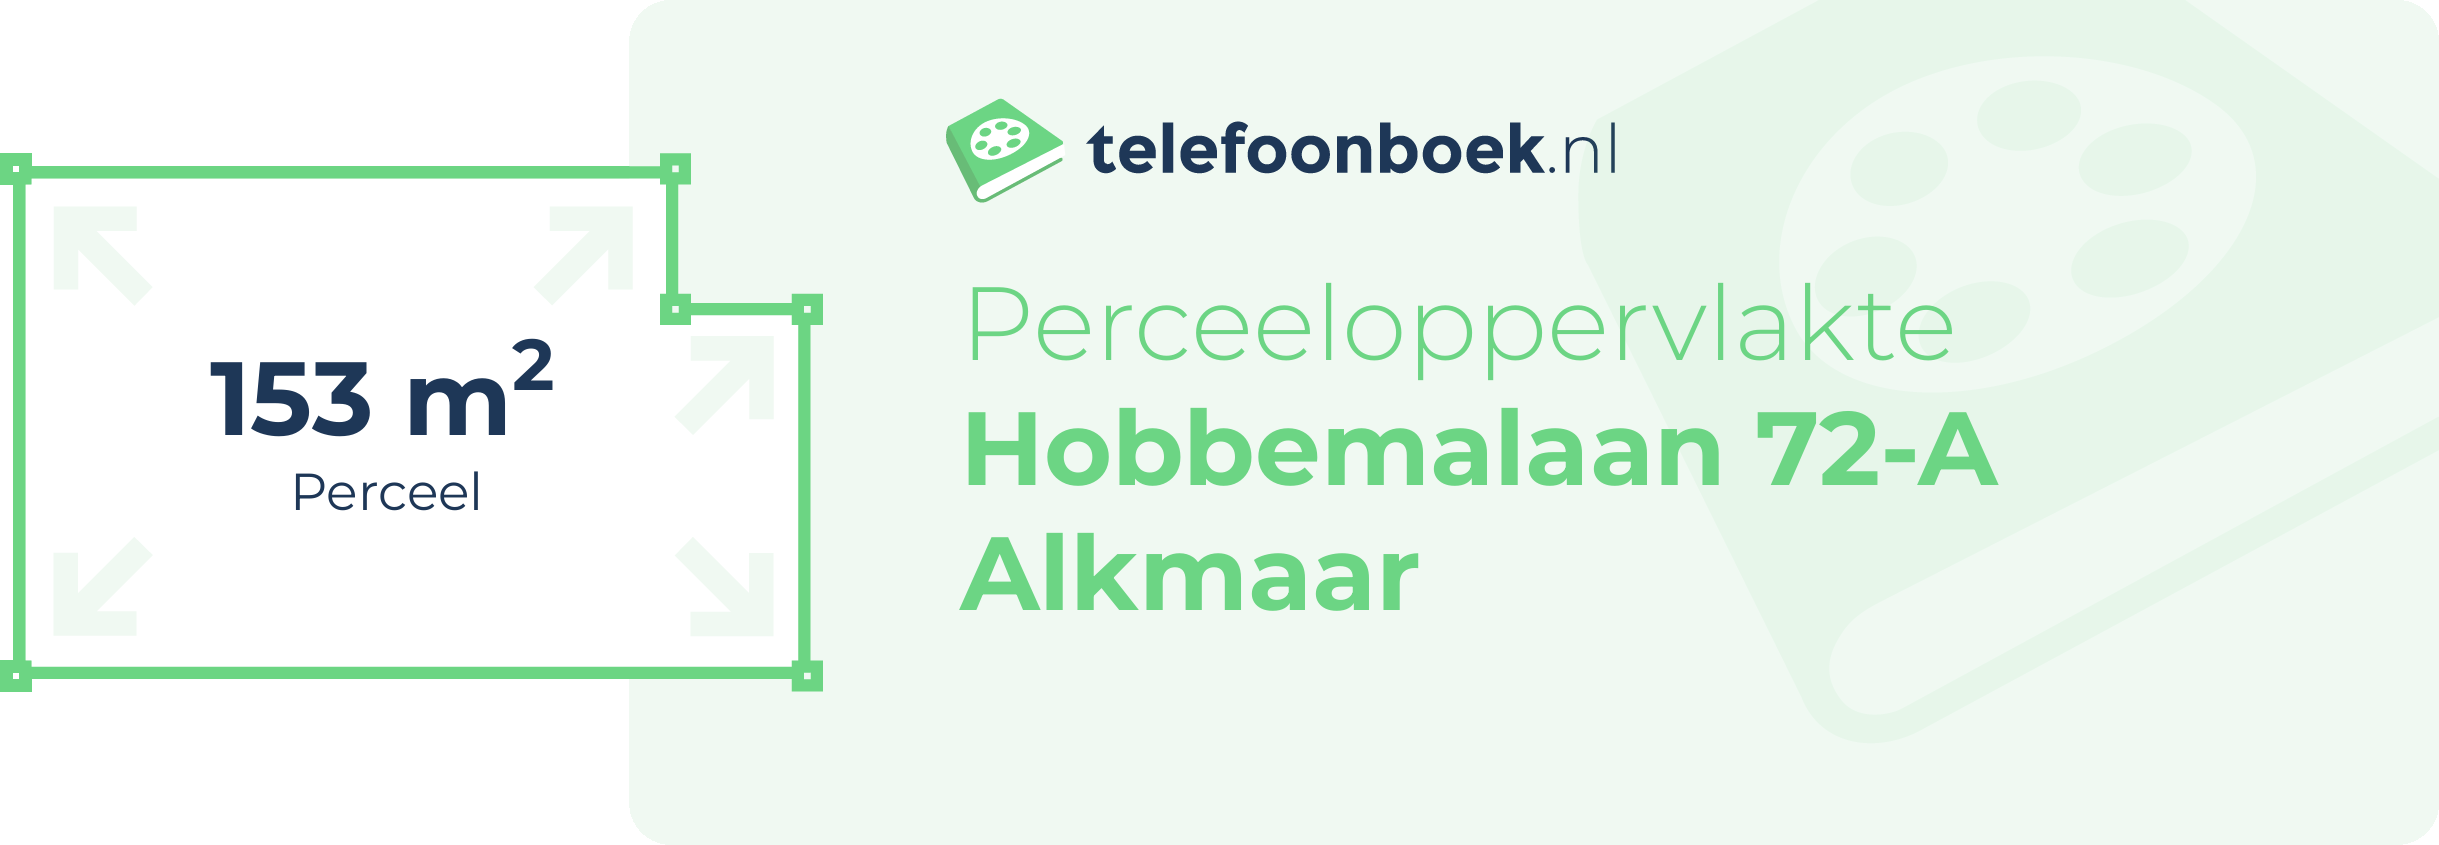 Perceeloppervlakte Hobbemalaan 72-A Alkmaar